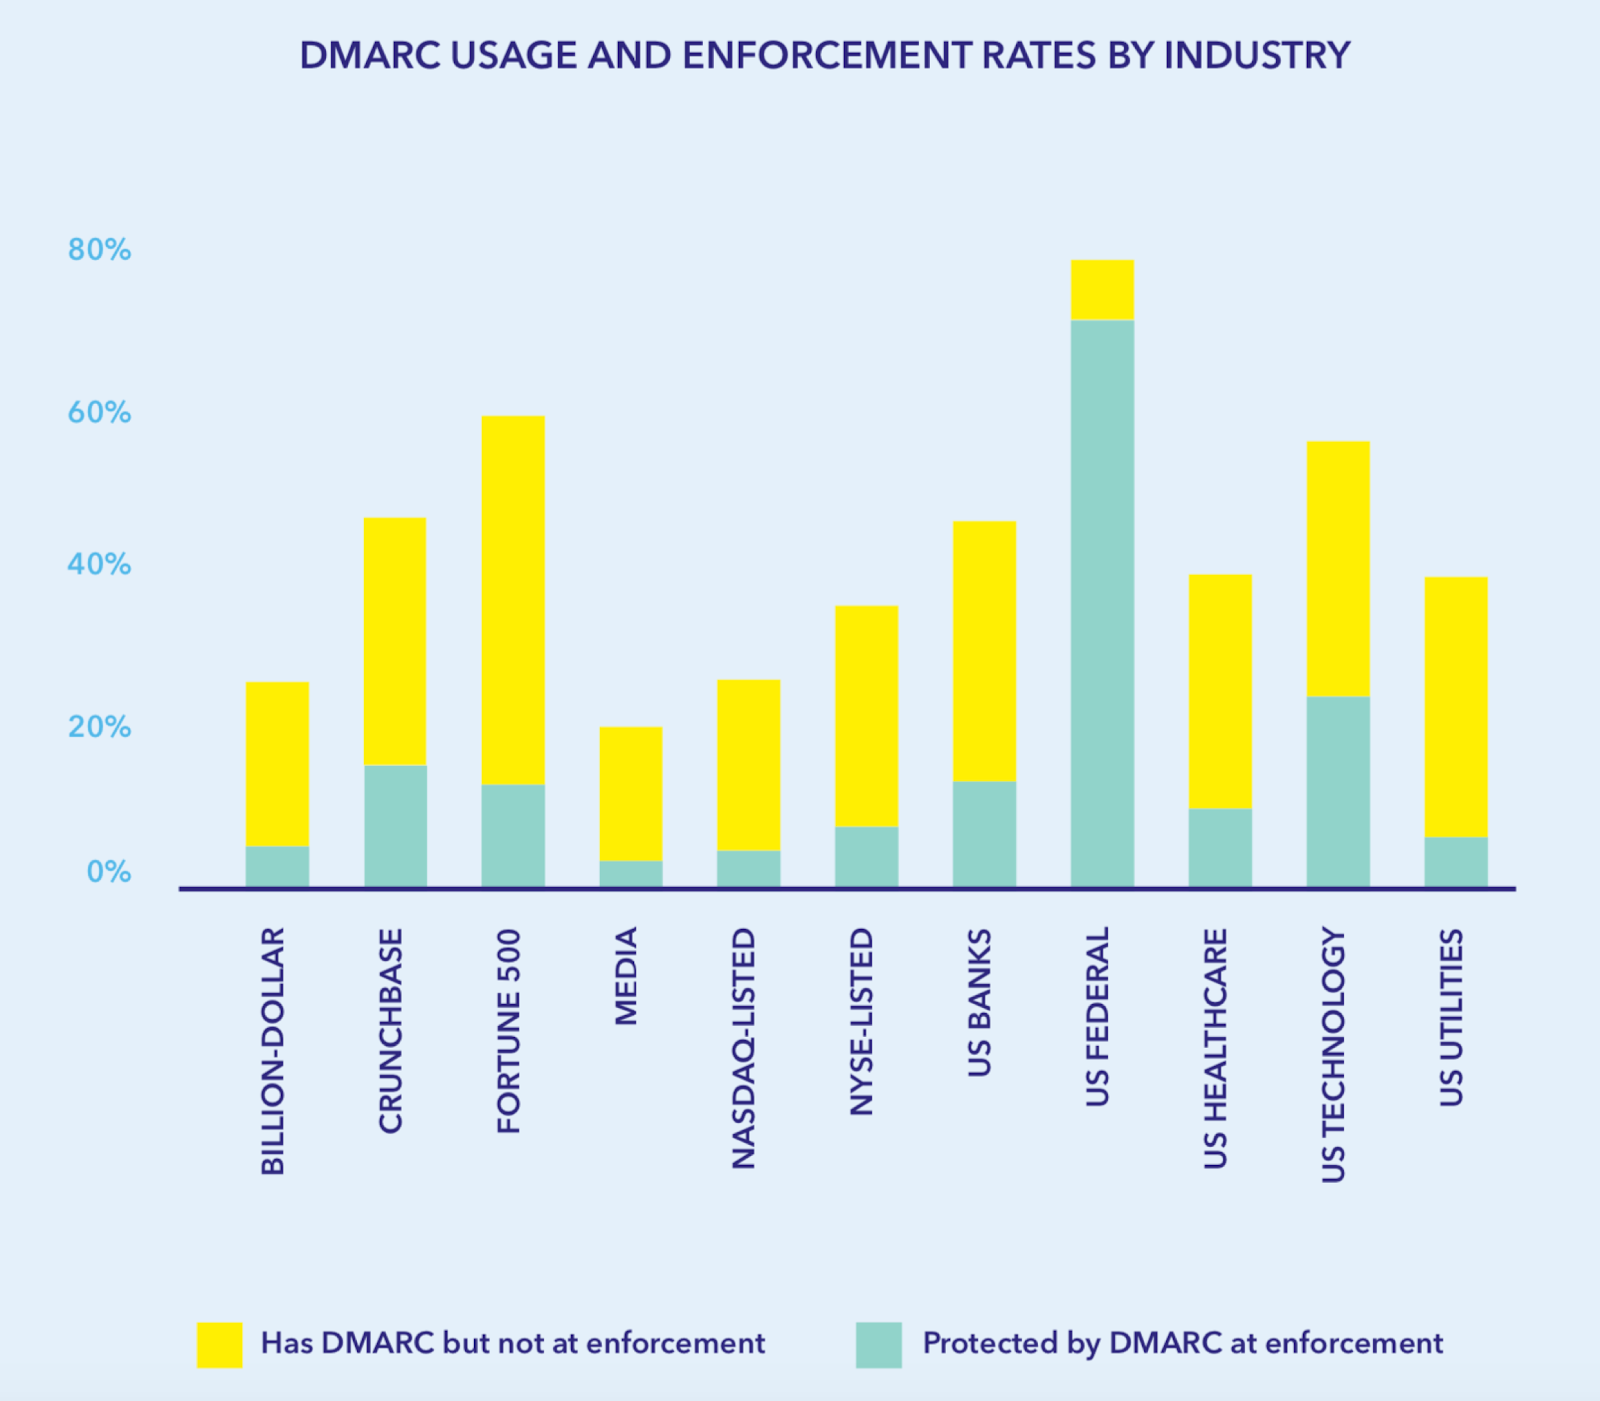 DMARC usage and enforcement rates